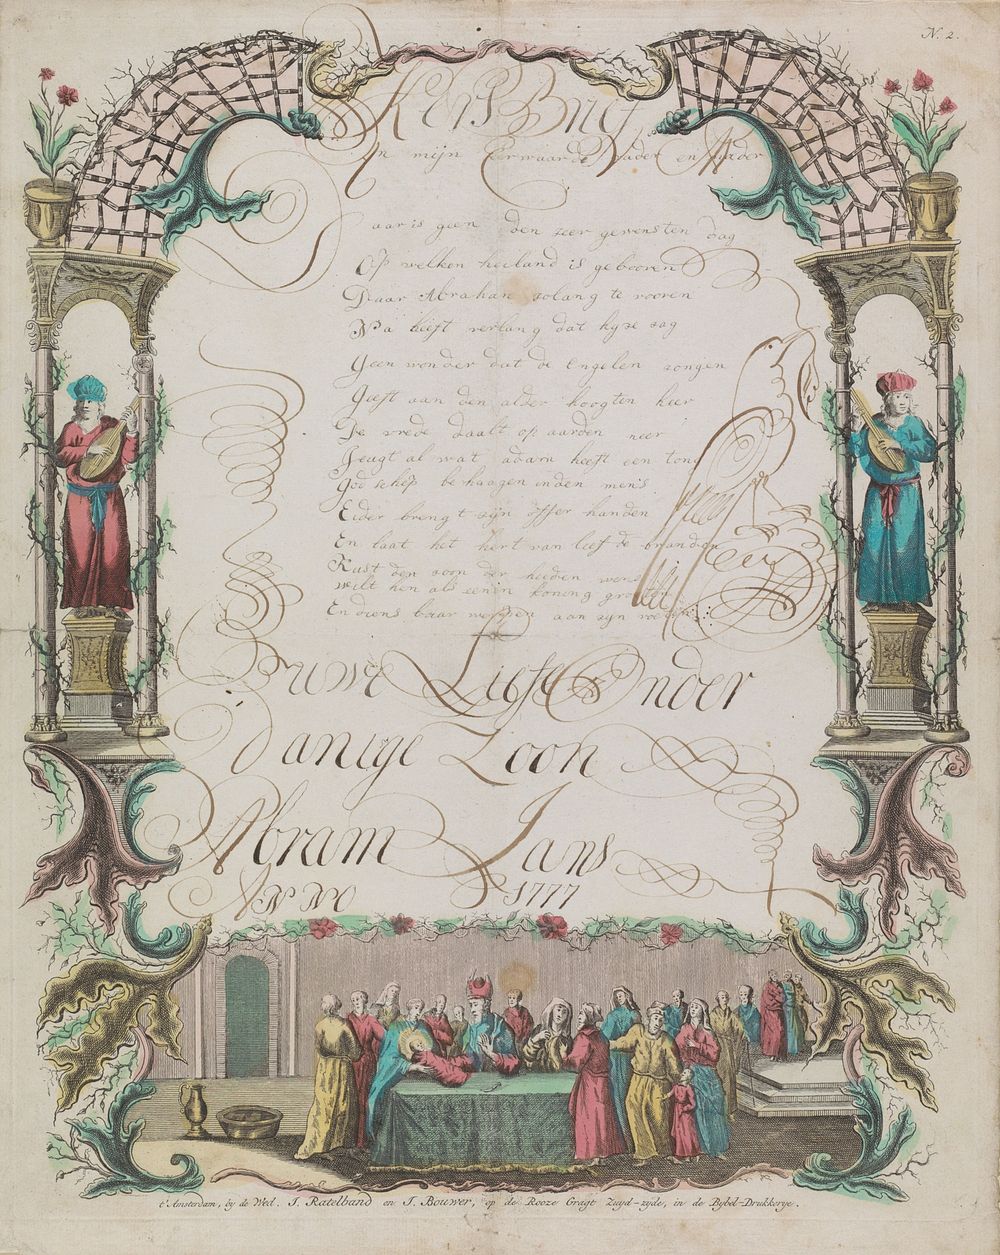 Wensbrief met besnijdenis van Christus (1777) by weduwe Jeronimus Ratelband en Johannes Bouwer and anonymous